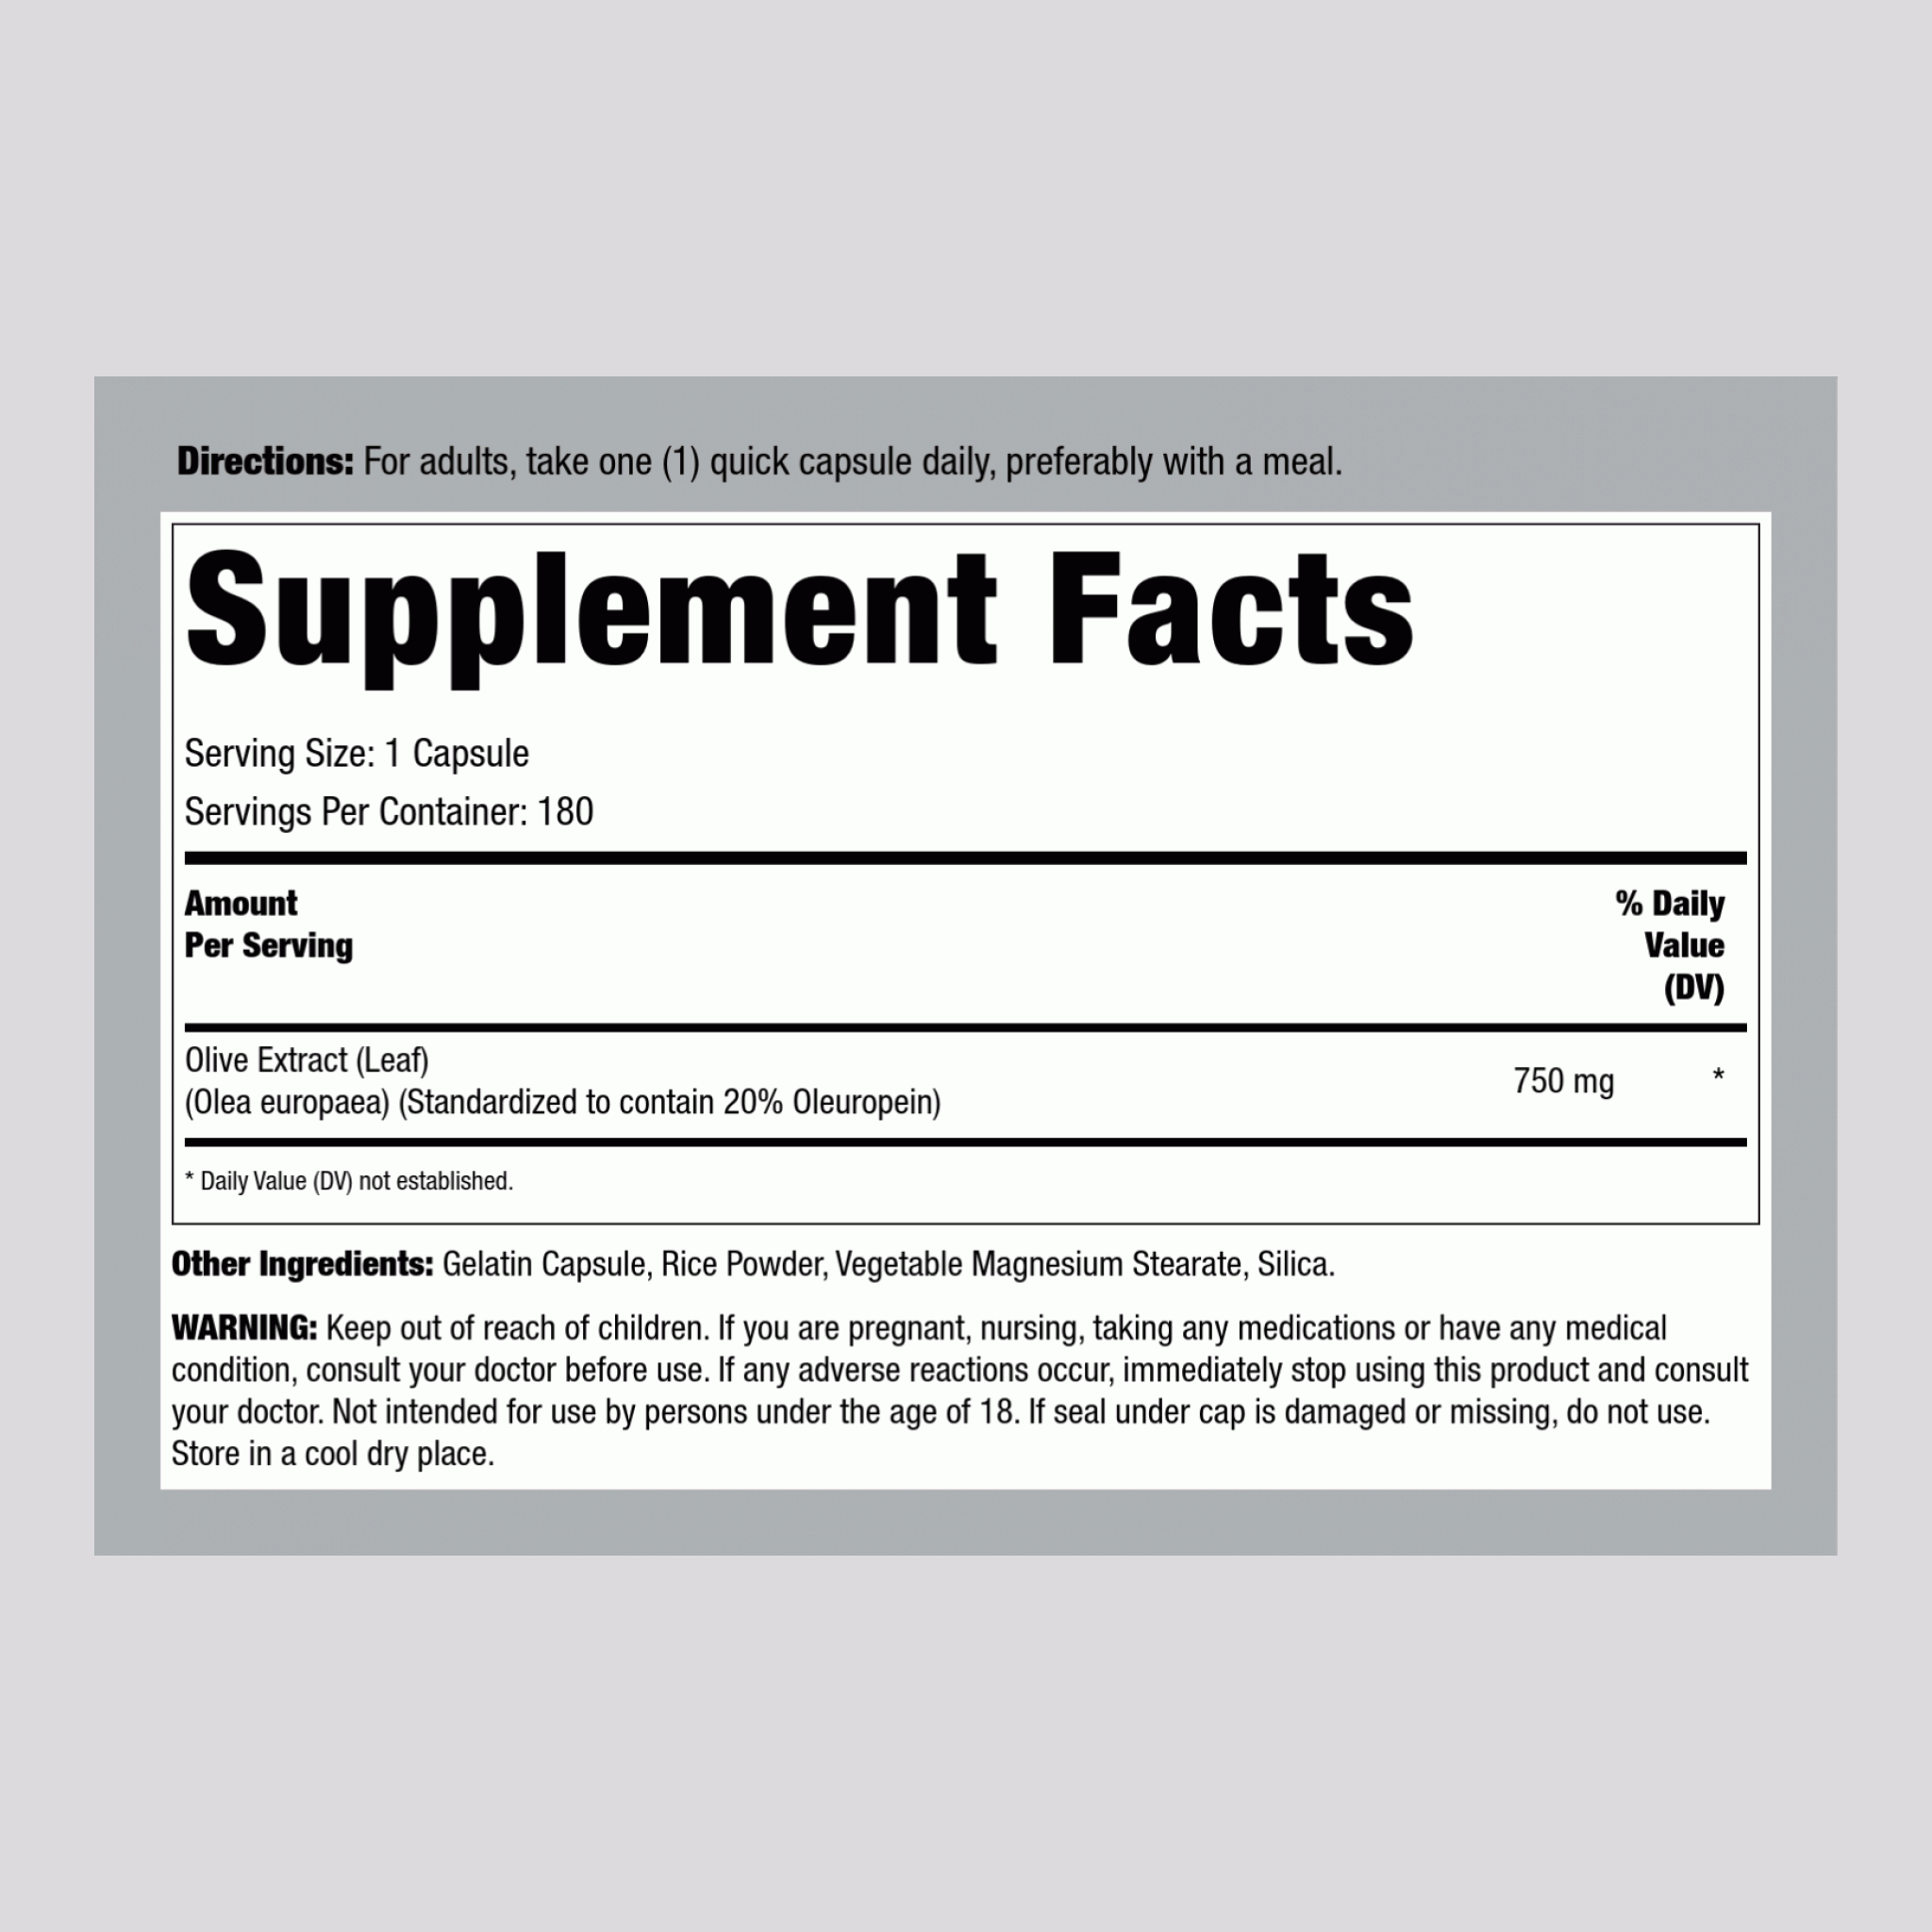 Olive Leaf Standardized Extract, 750 mg, 180 Capsules, 2  Bottles